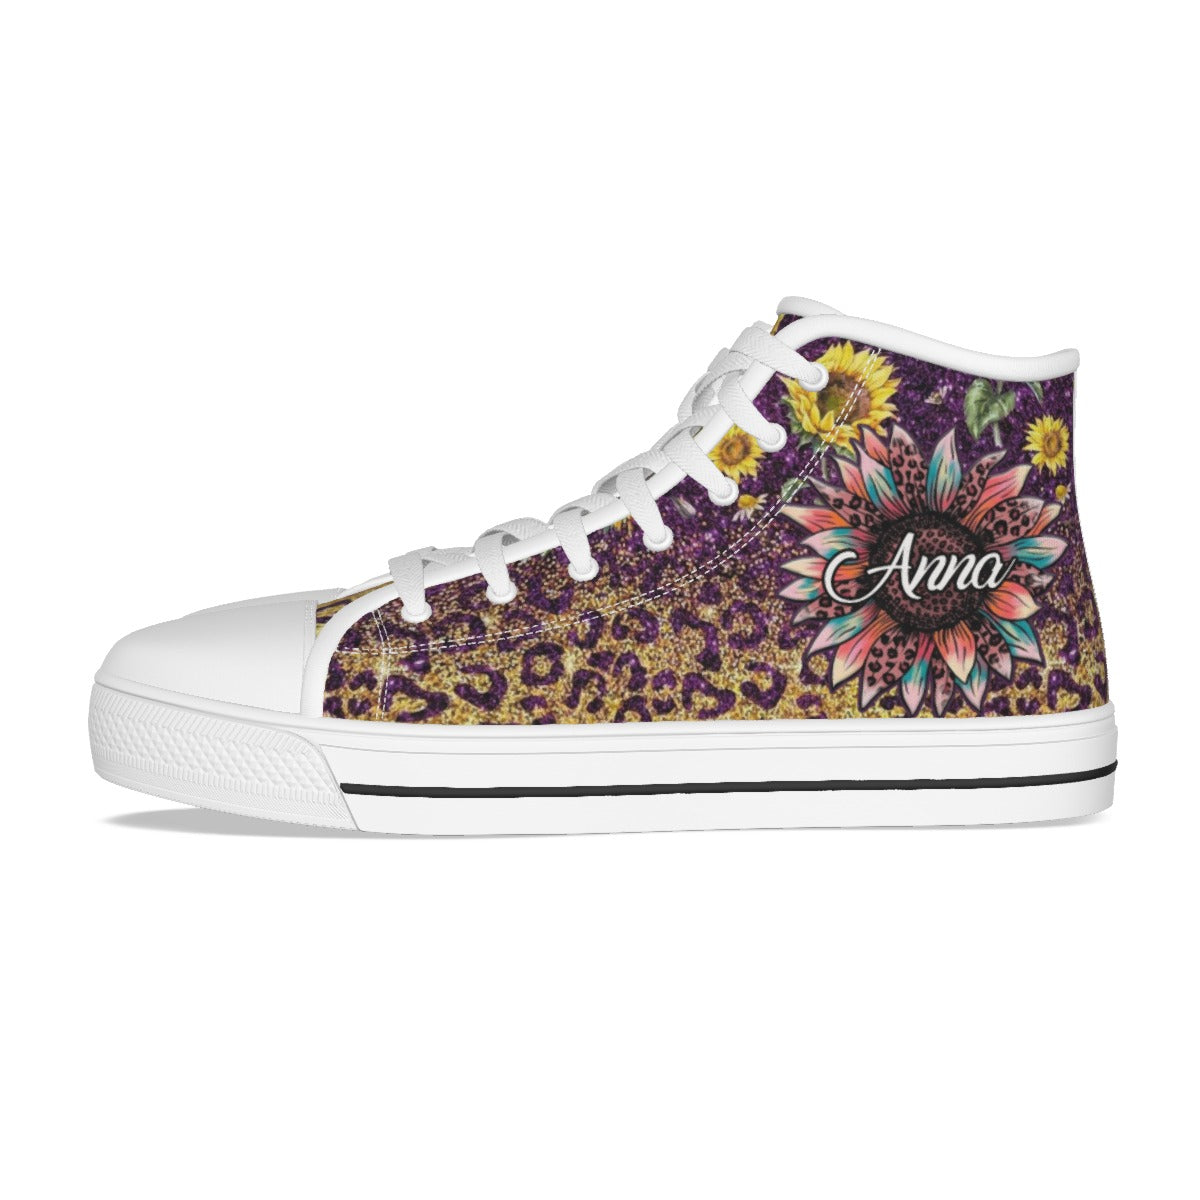 EShoes Personalized Flower Women's Canvas Shoes, Flower Shoes, Custom Shoes.